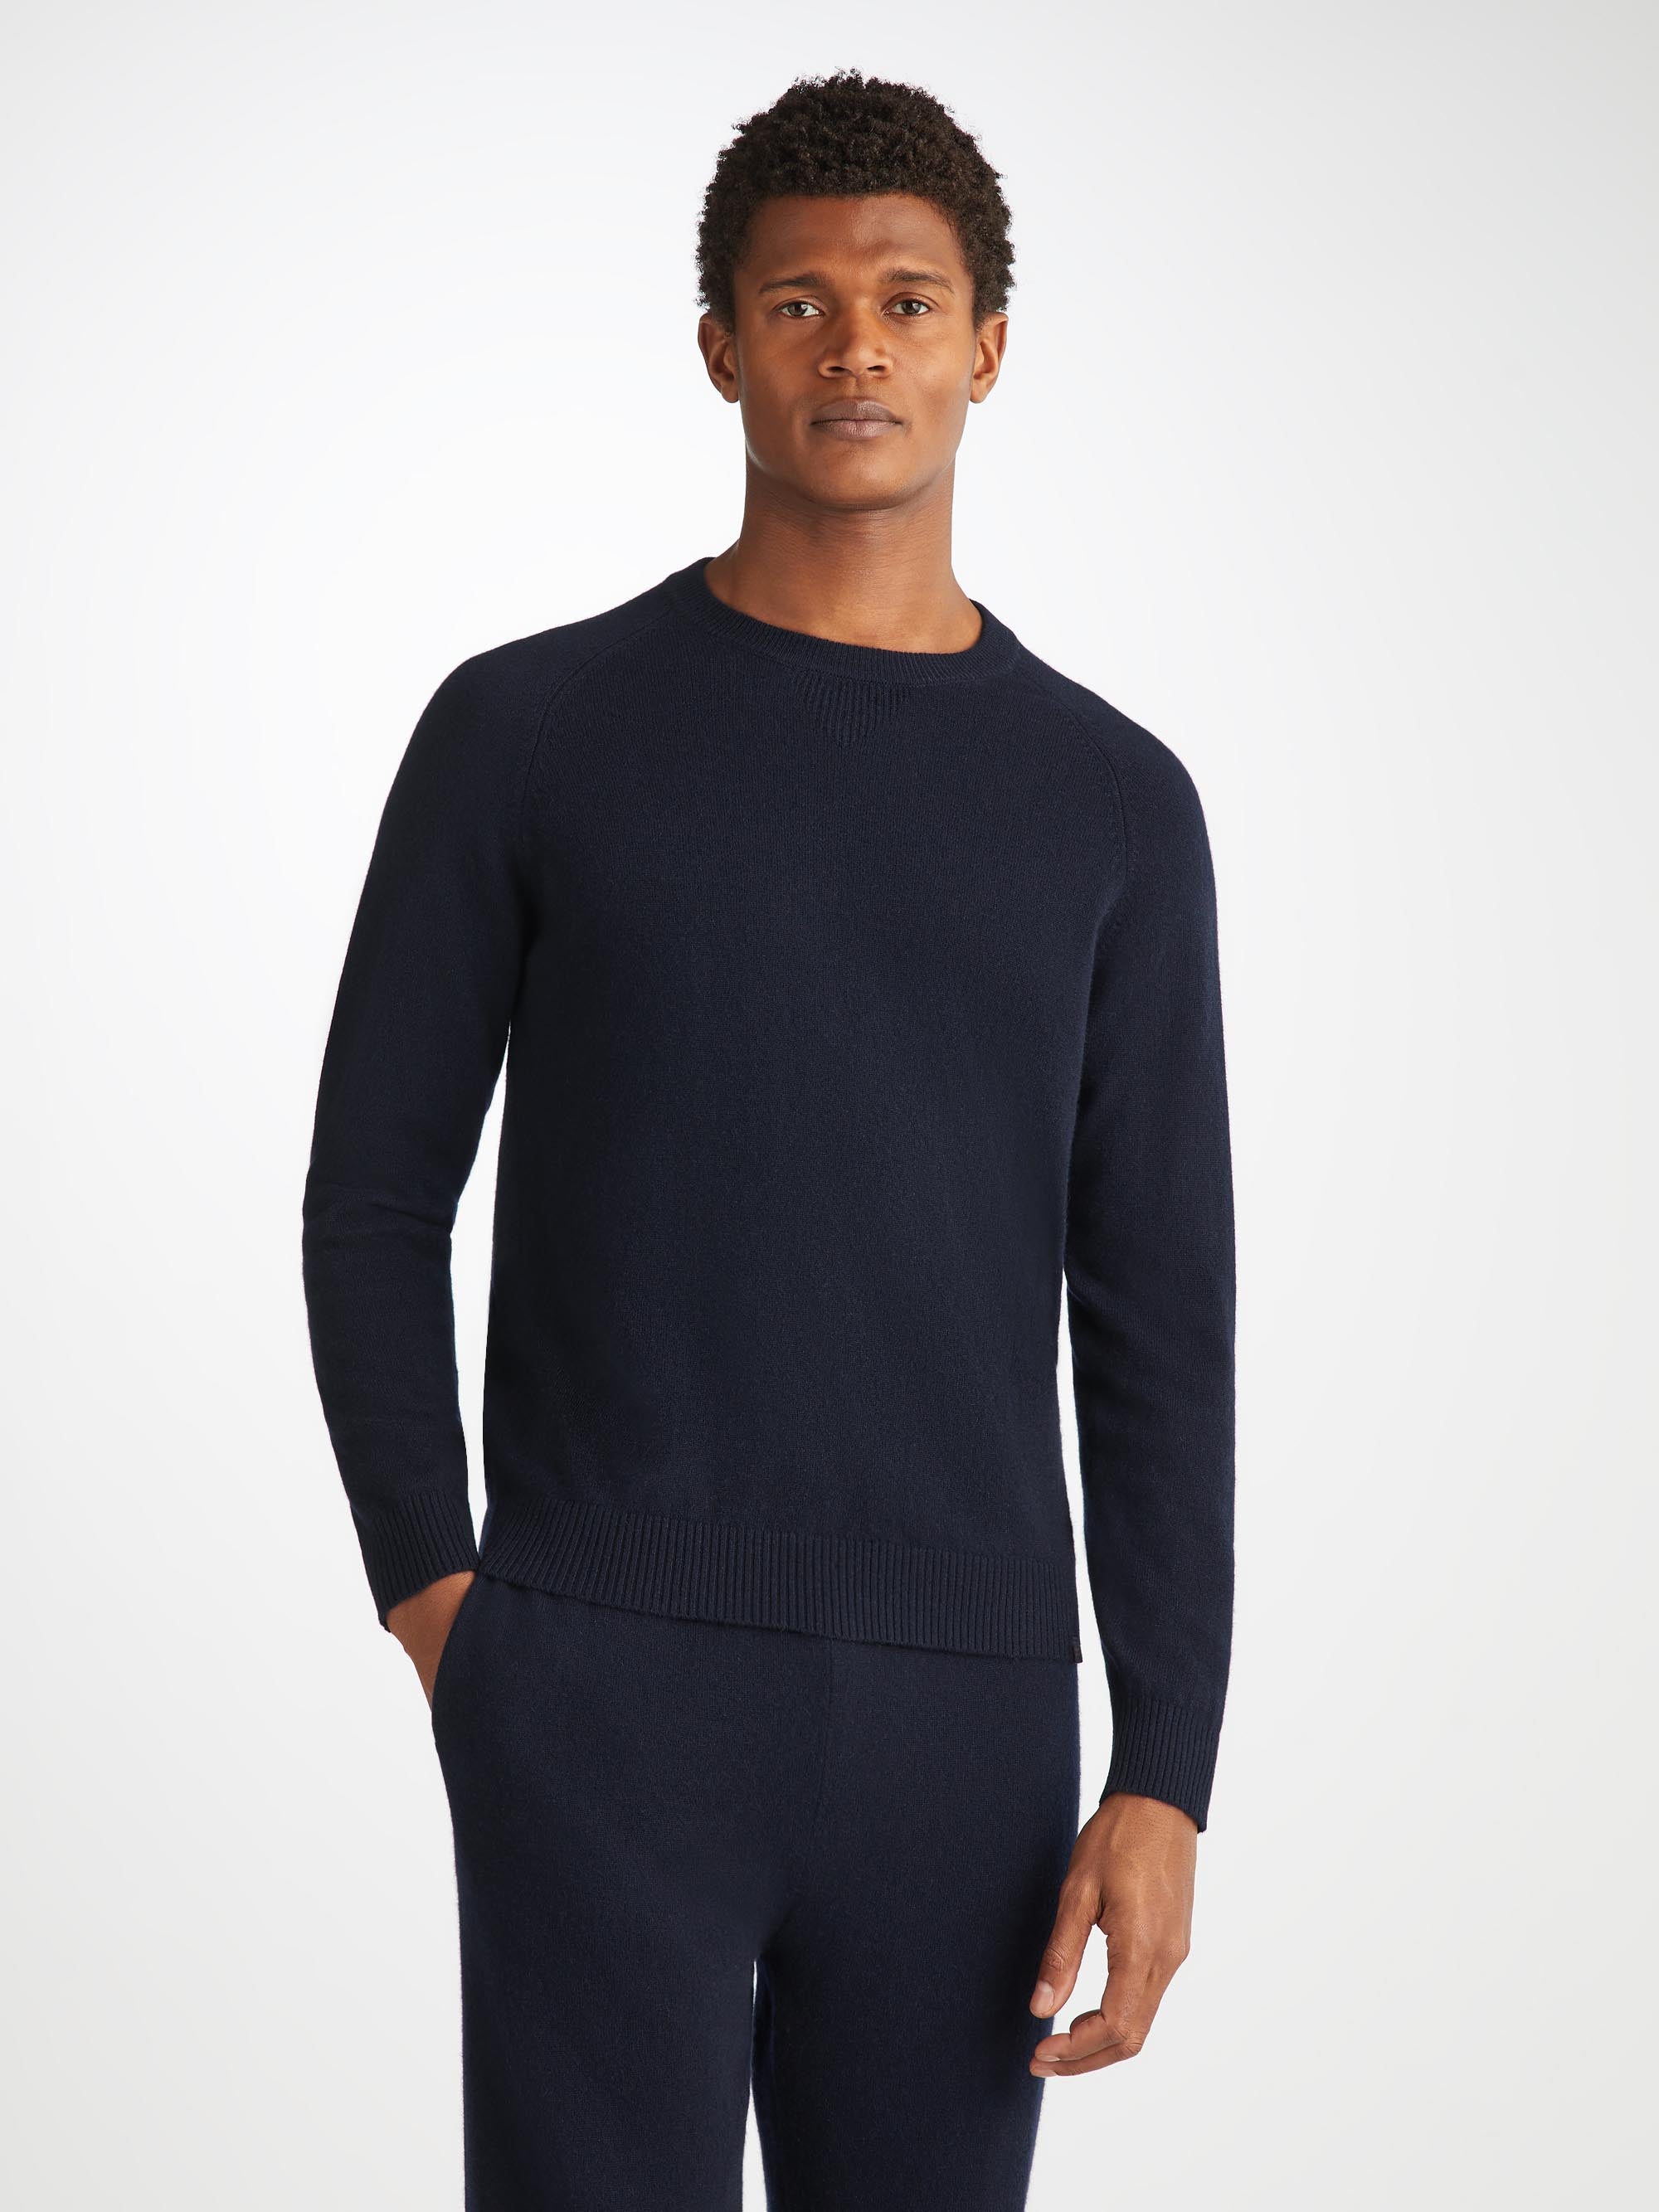 Men's Sweater Finley Cashmere Navy